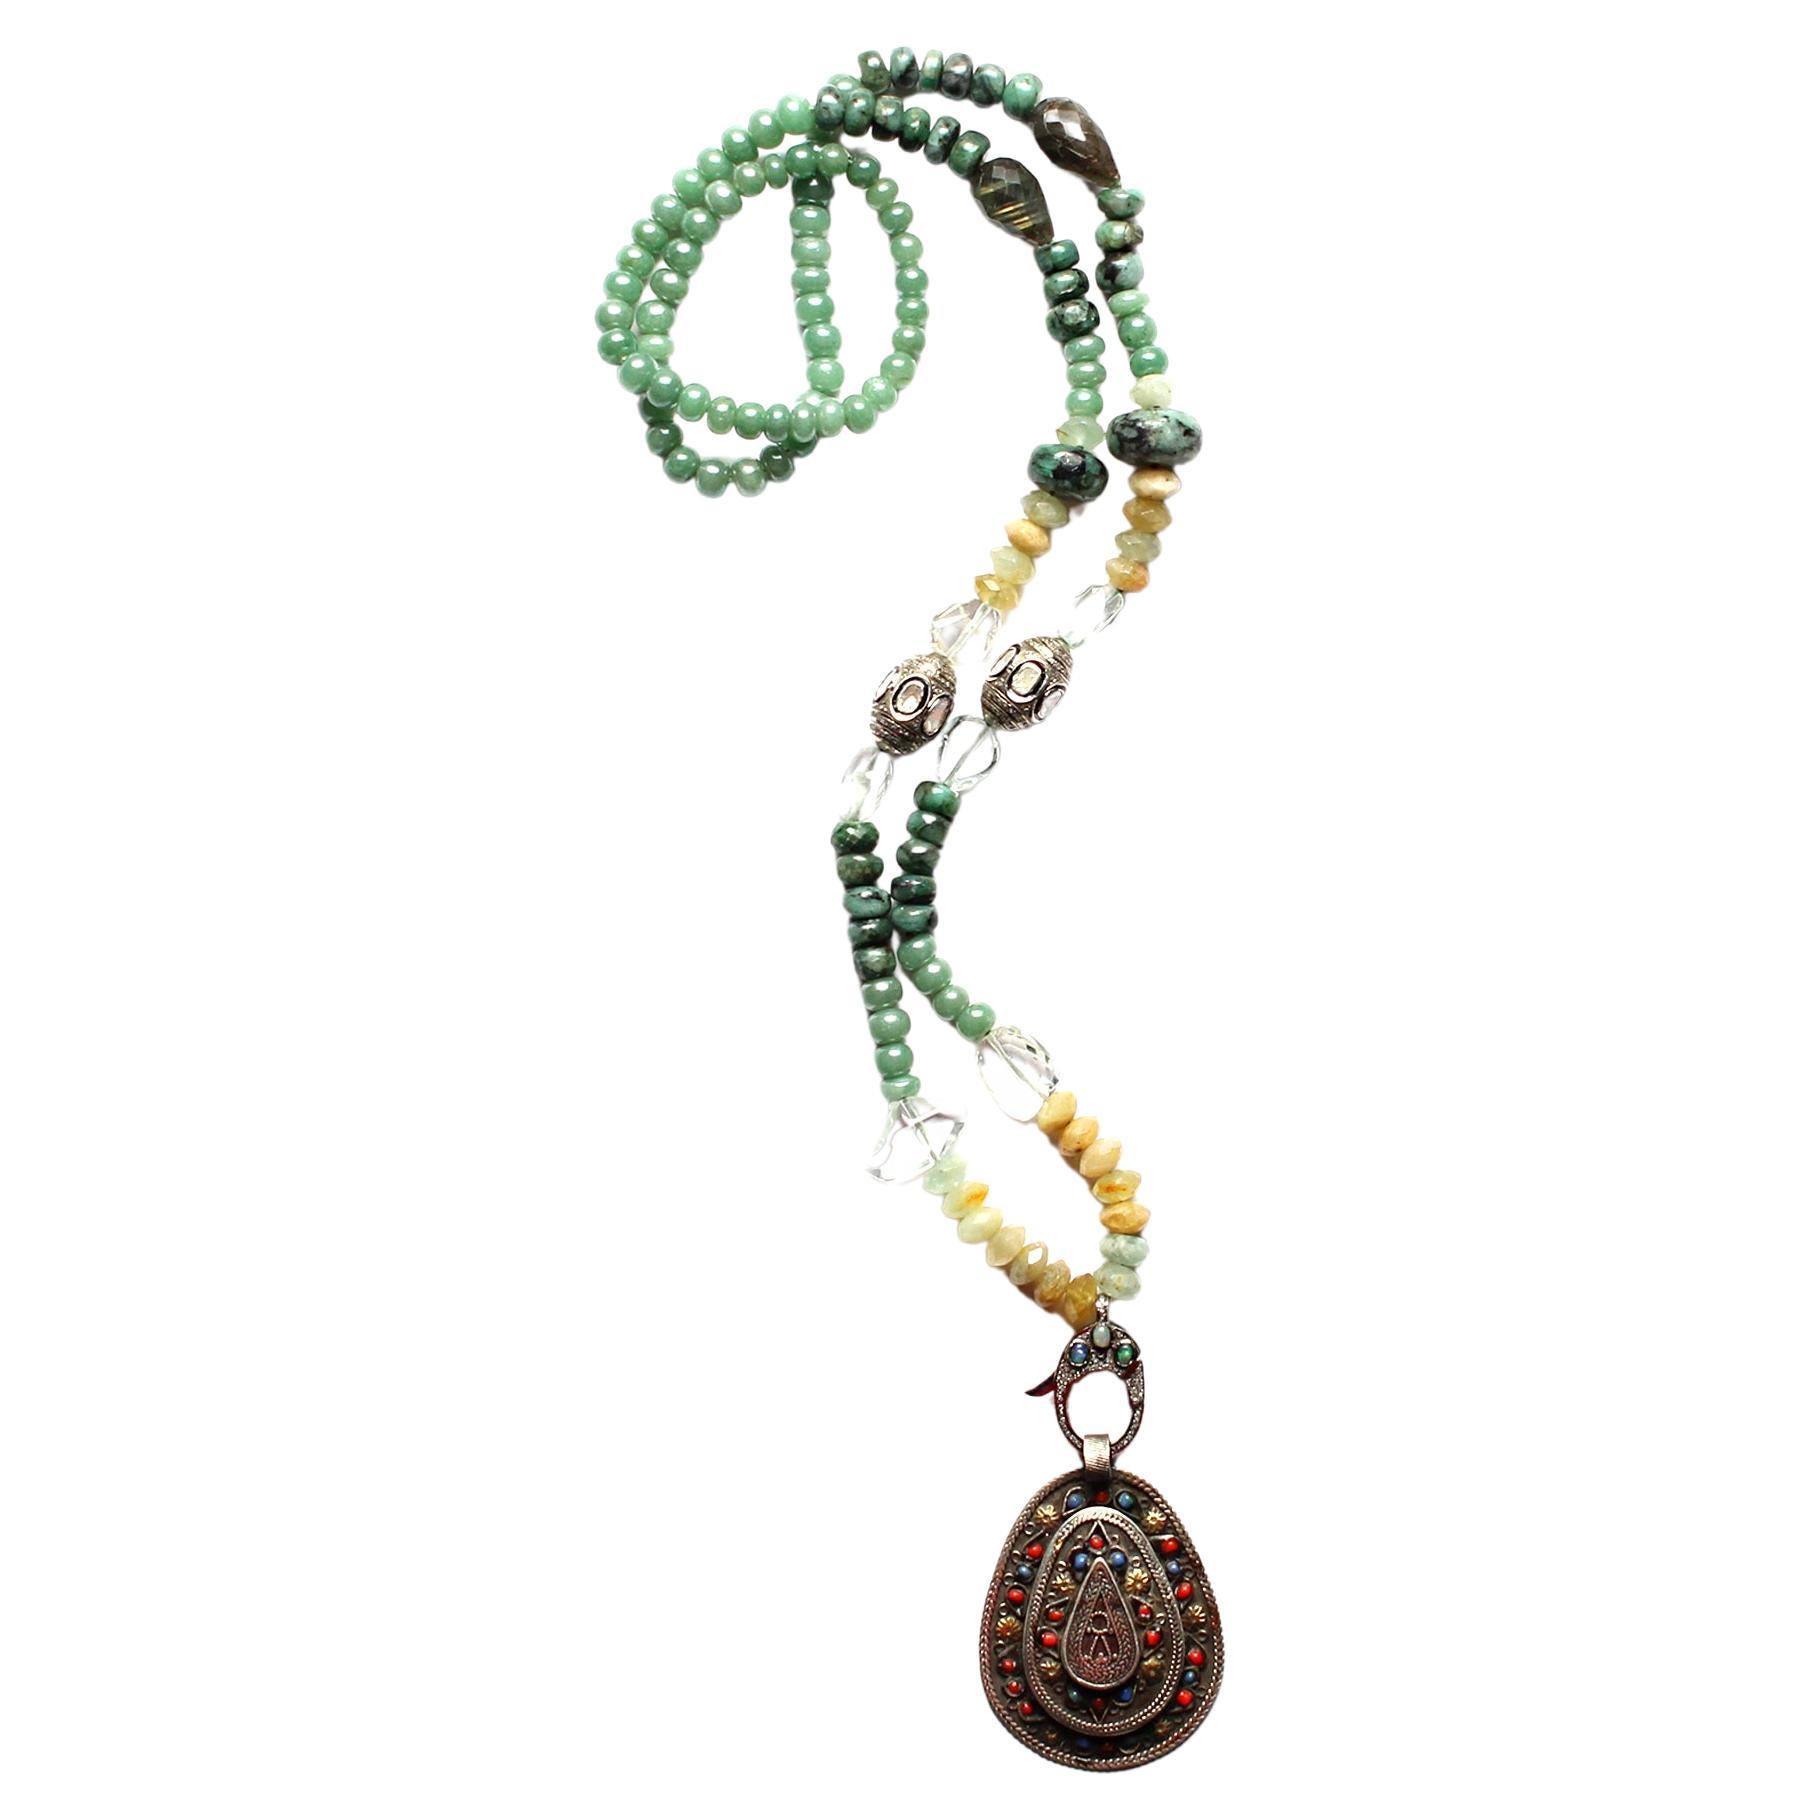 Clarissa Bronfman Collier pendentif marocain ancien en opale, jade, pierre de lune et diamants